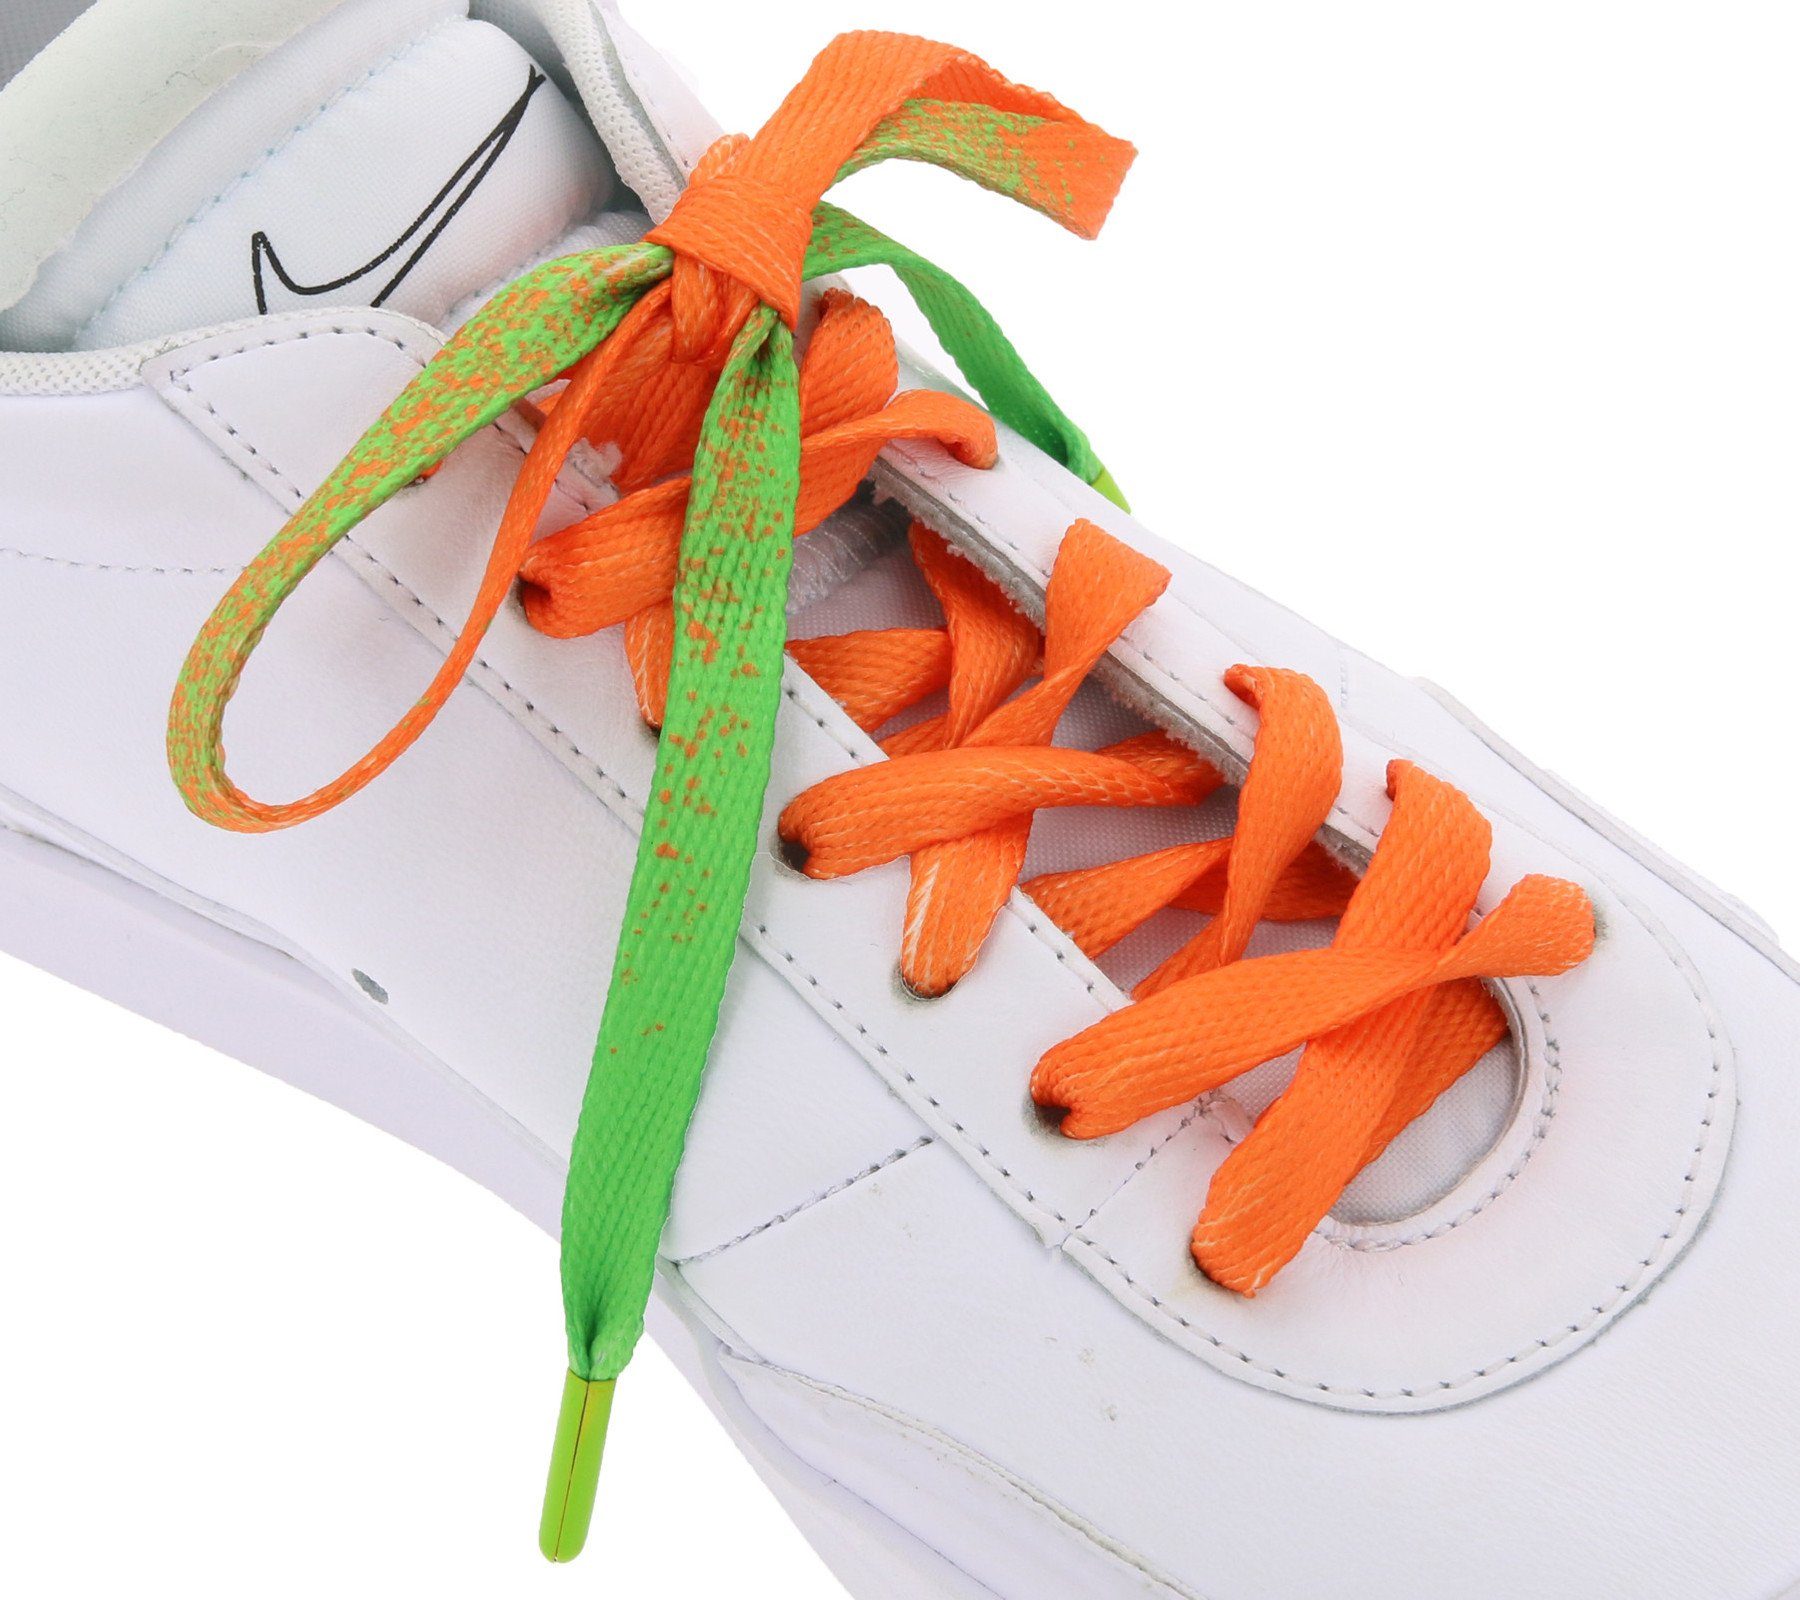 Tubelaces Schnürsenkel TubeLaces Schuhe Schuhbänder auffällige Schnürsenkel Schnürbänder Neon Grün/Orange | Schnürsenkel